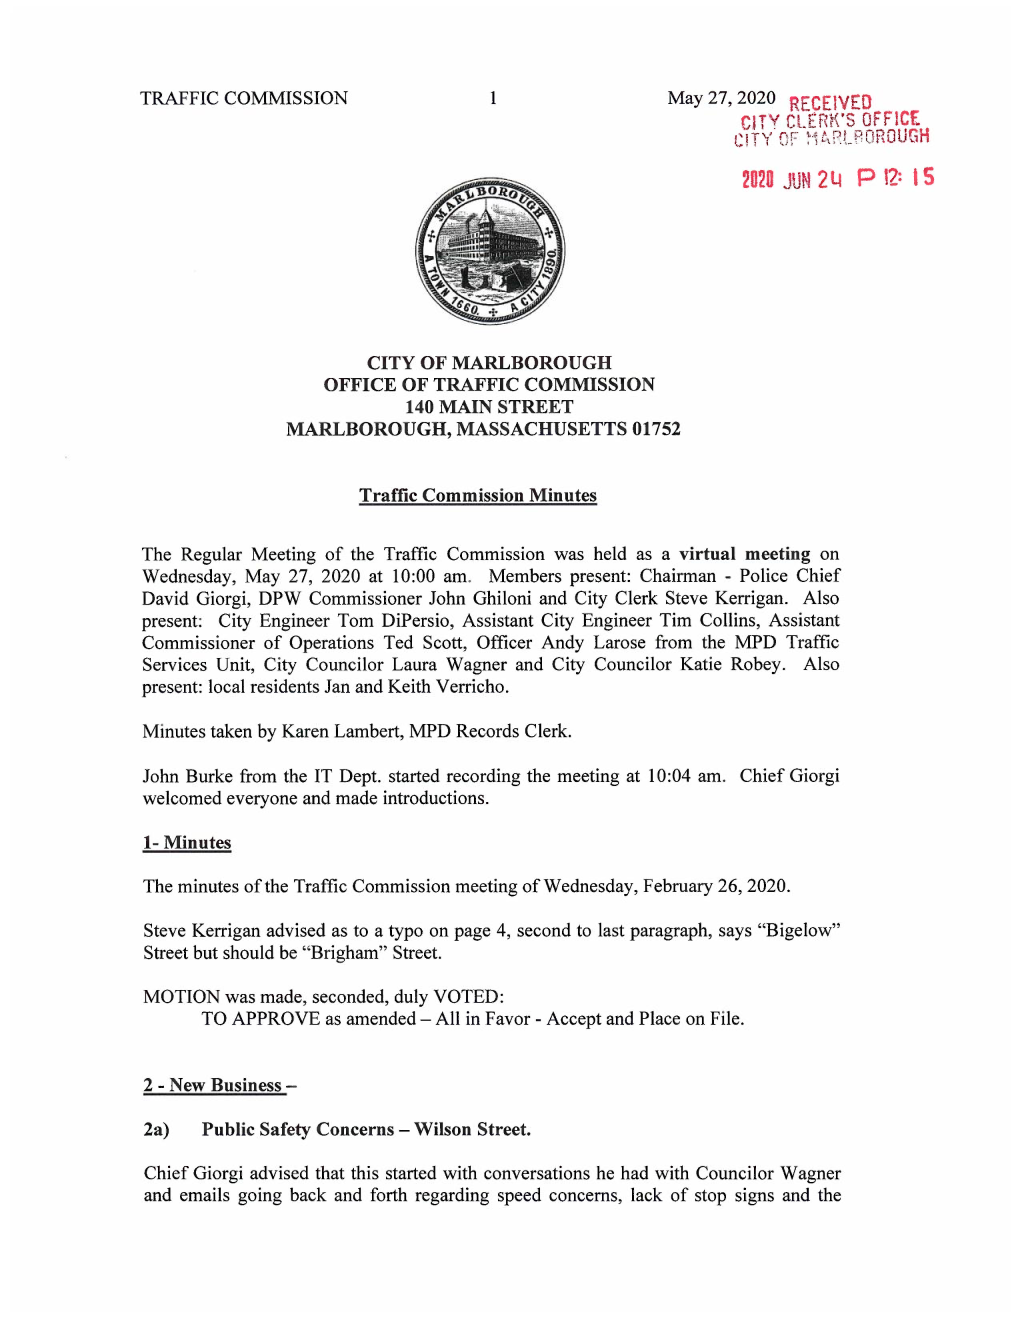 Traffic Commission Minutes